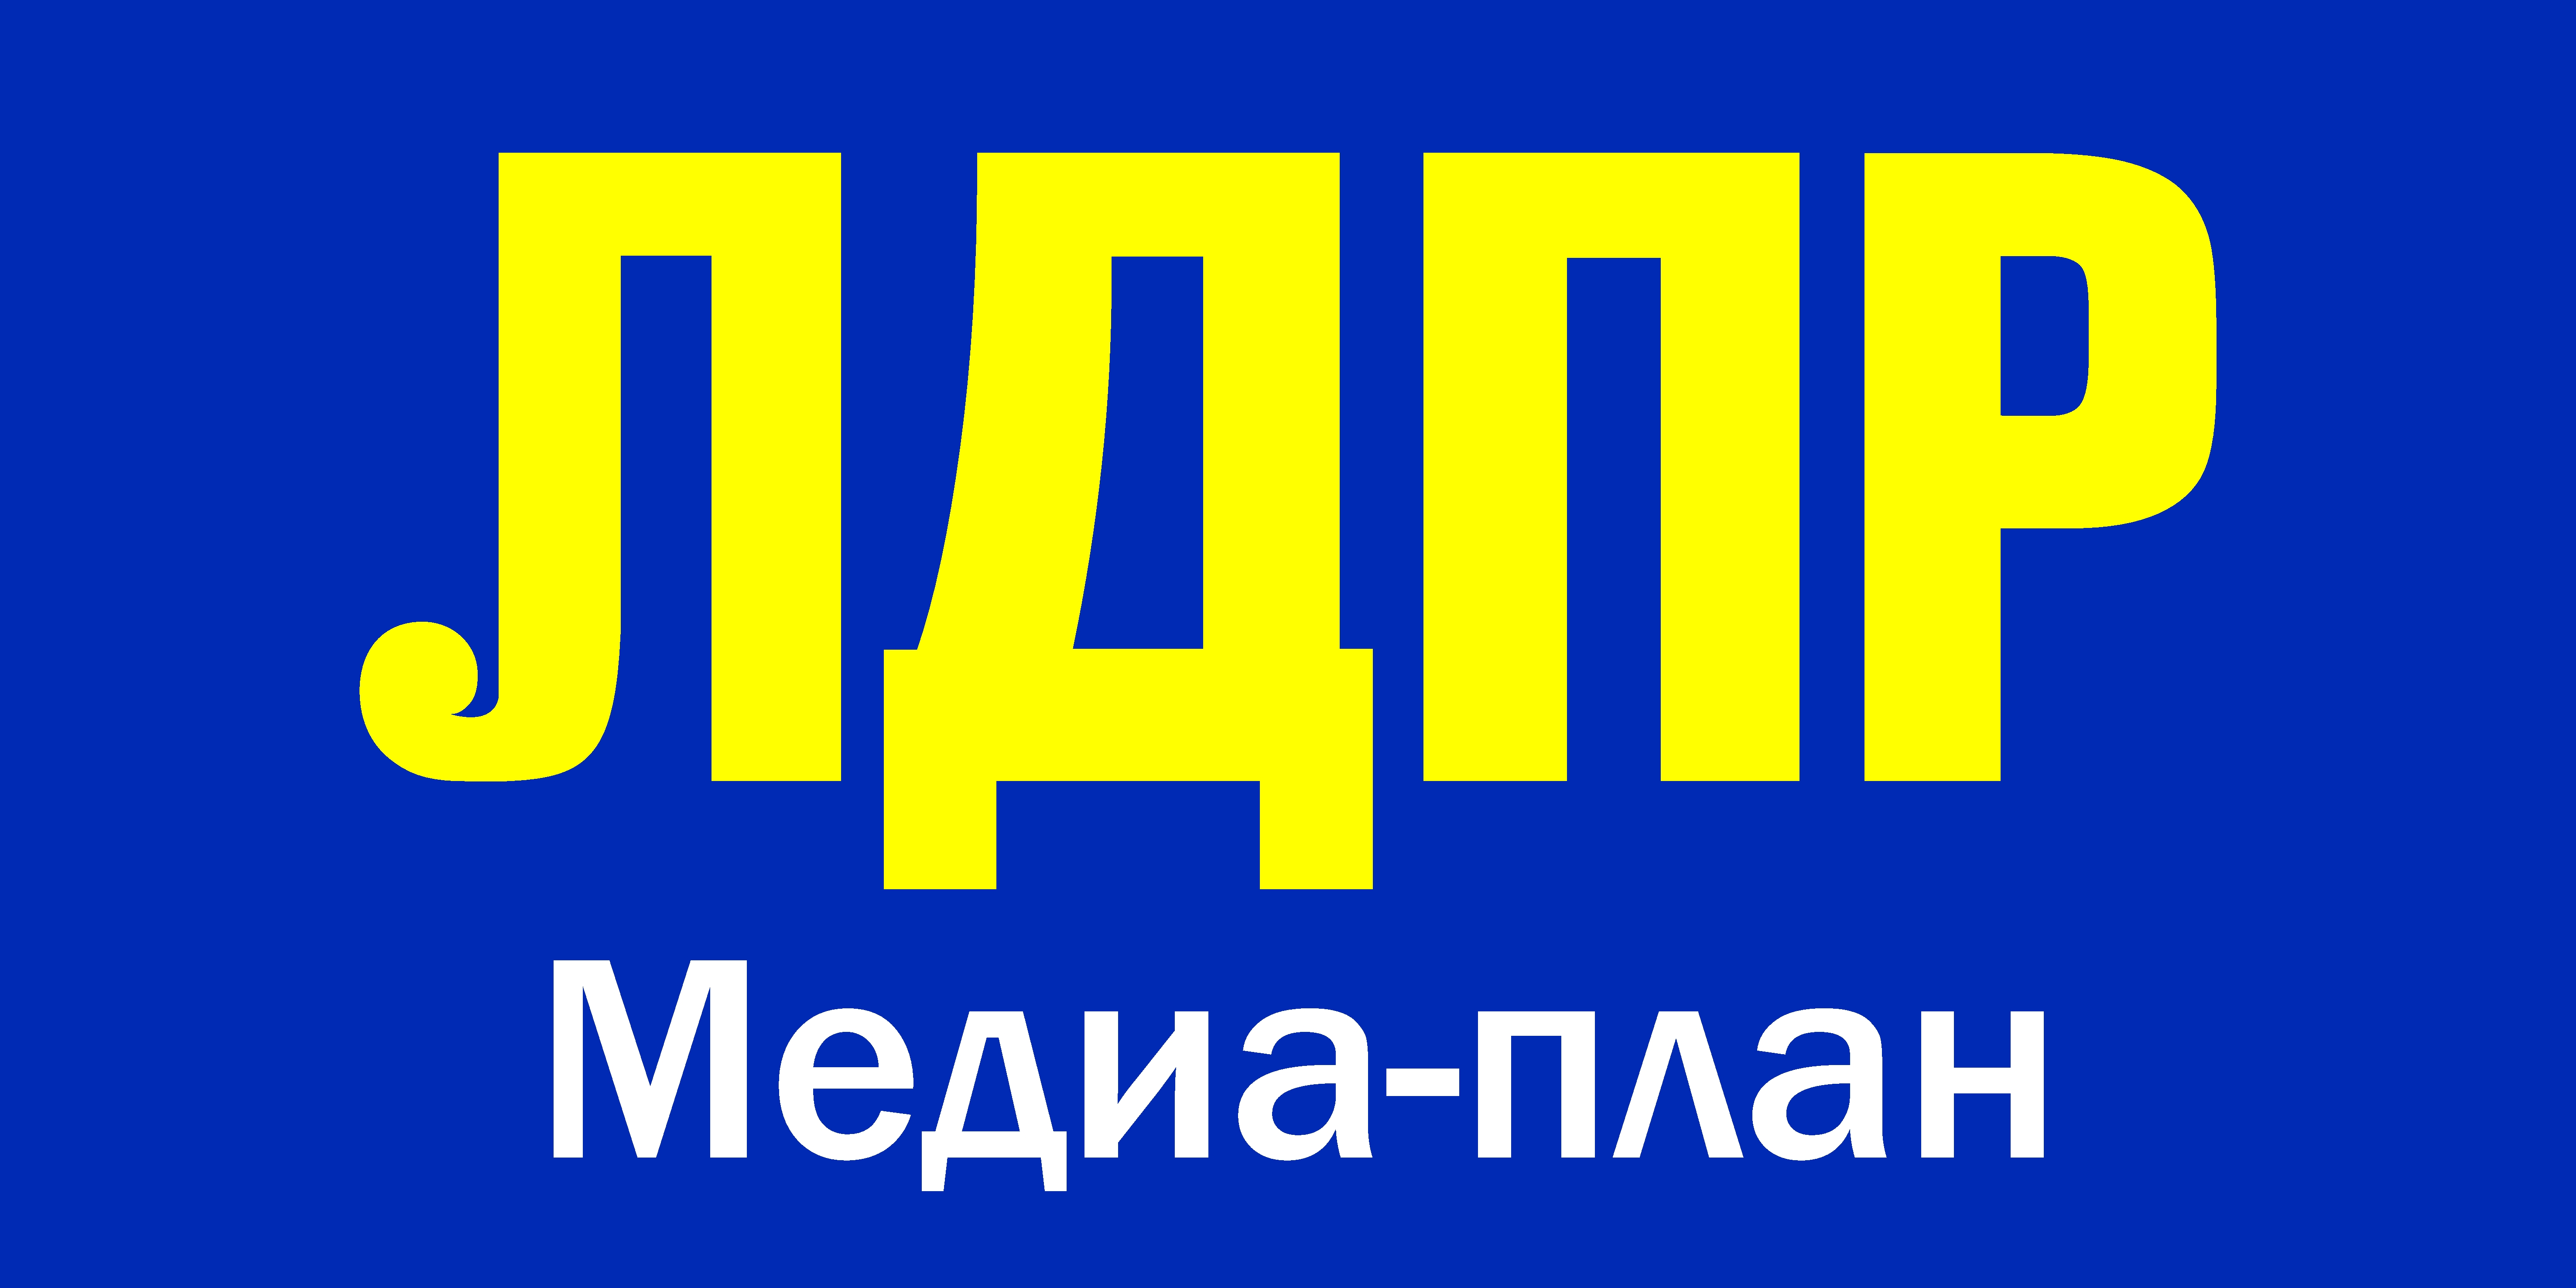 ЛДПР логотип